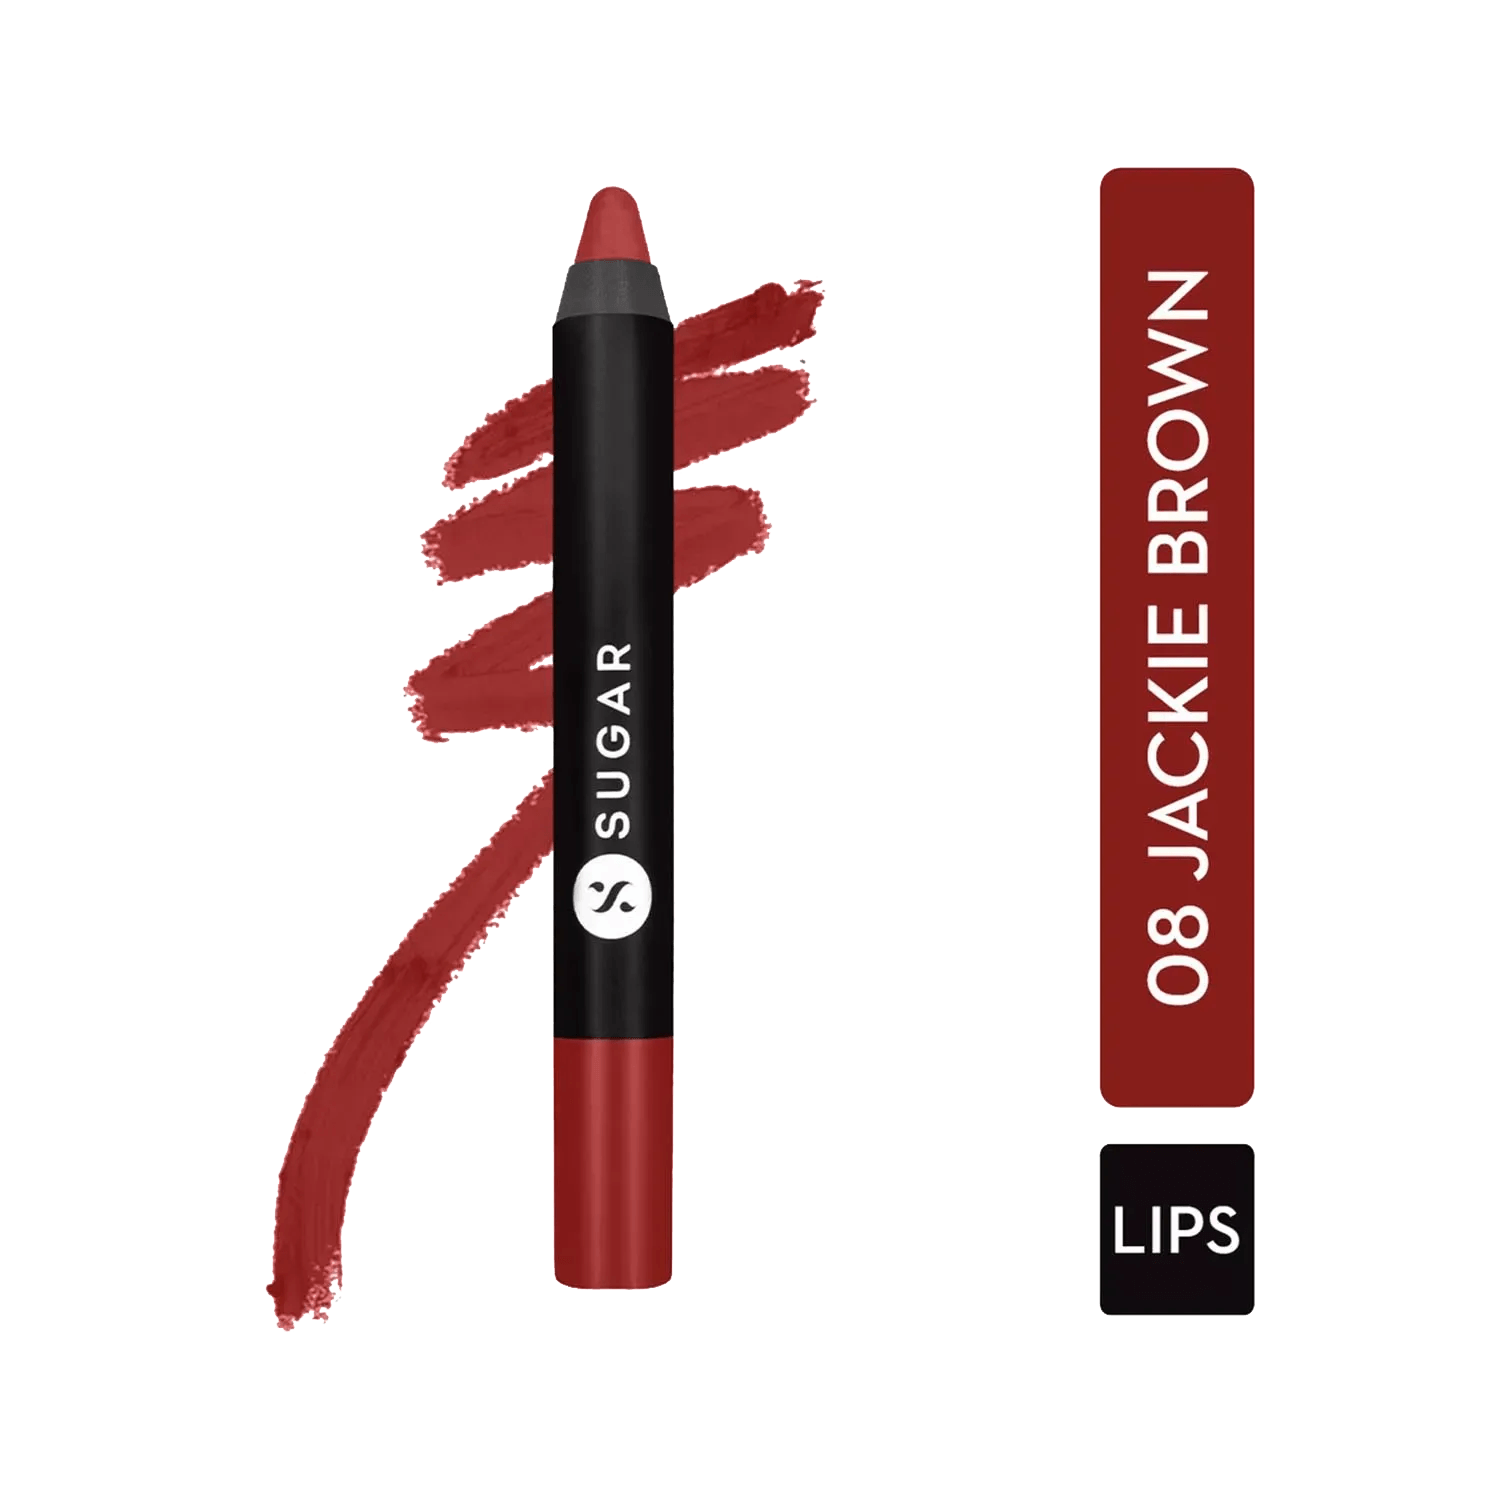 SUGAR Cosmetics Matte As Hell Crayon Lipstick - 08 Jackie Brown (Reddish Brown) (2.8g)